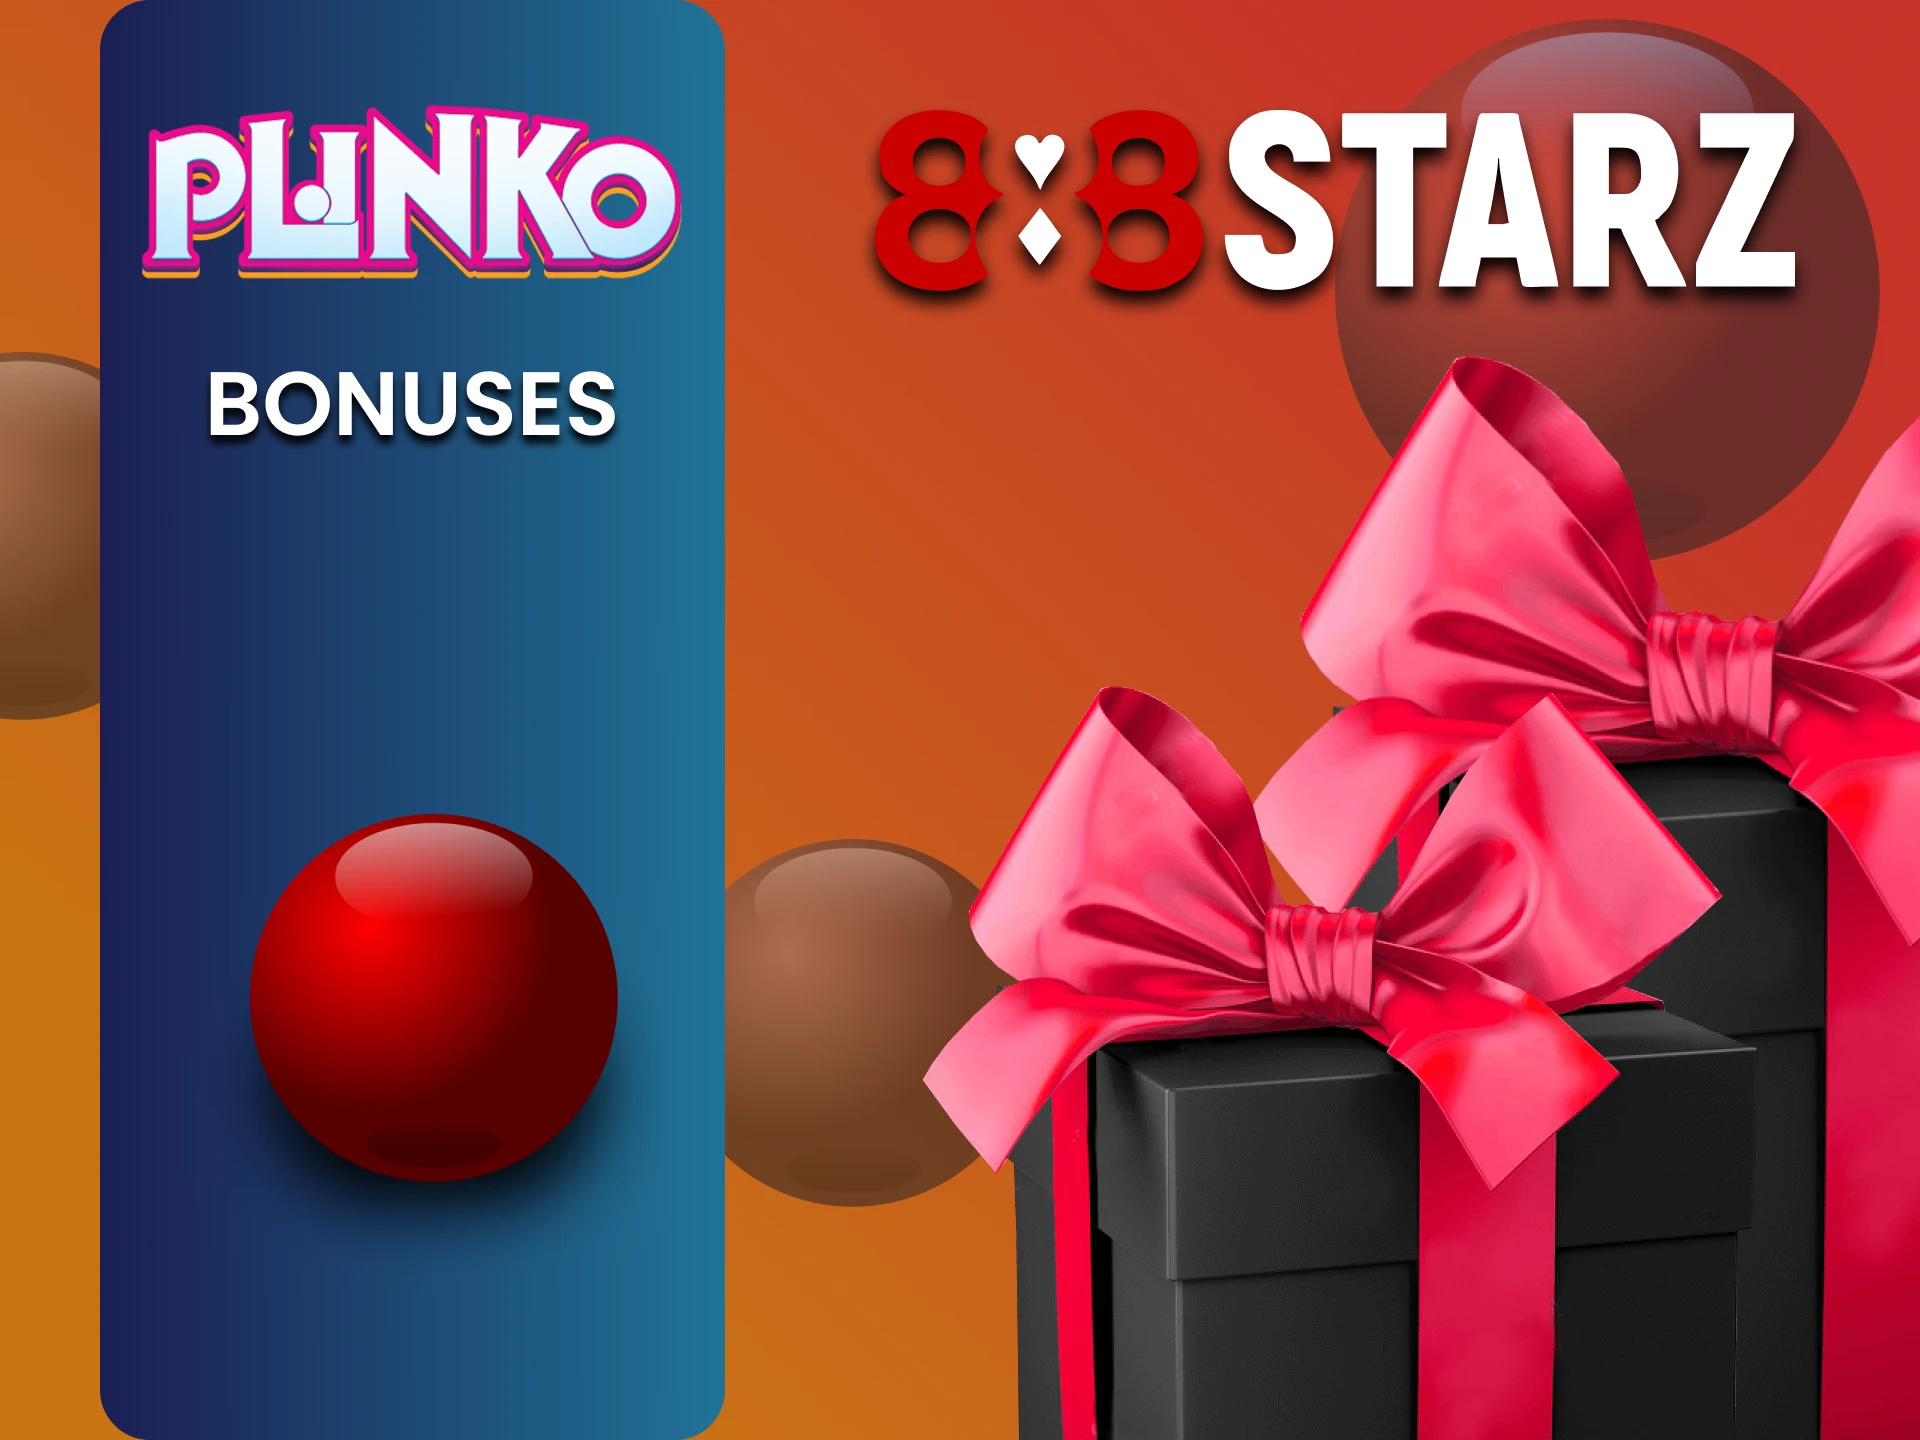 Get special Plinko bonuses from 888starz.